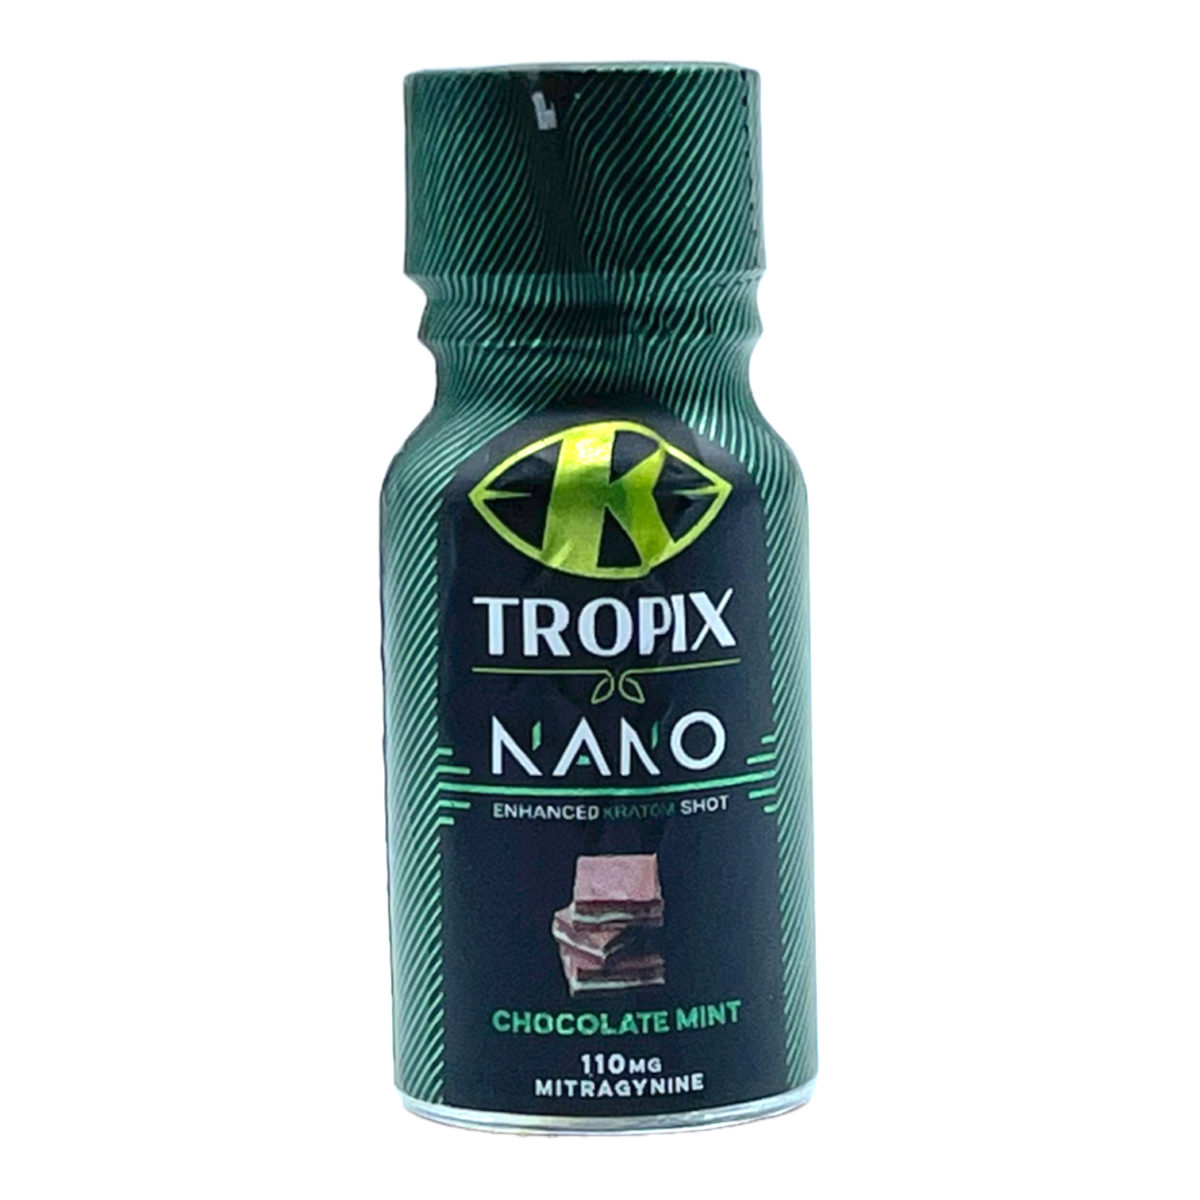 K-Tropix Exclusive Chocolate Mint Nano Kratom Shot – Buy 10 Get 2 Free